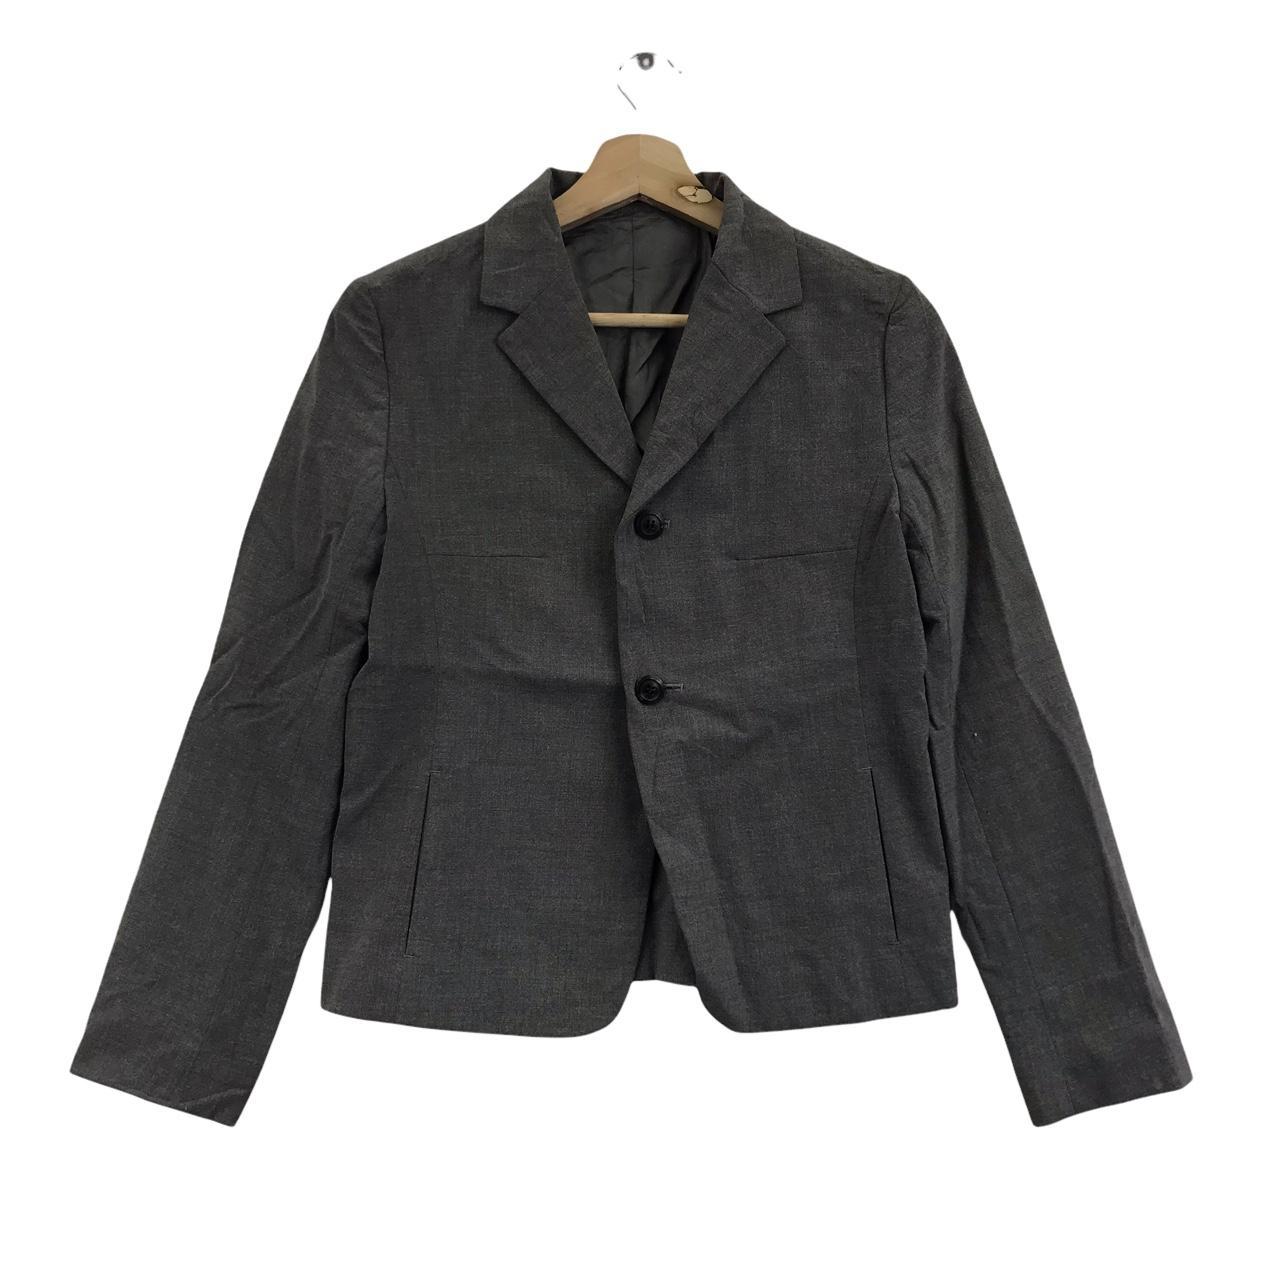 INED Yohji Yamamoto Japanese Brand Coat Jacket... - Depop